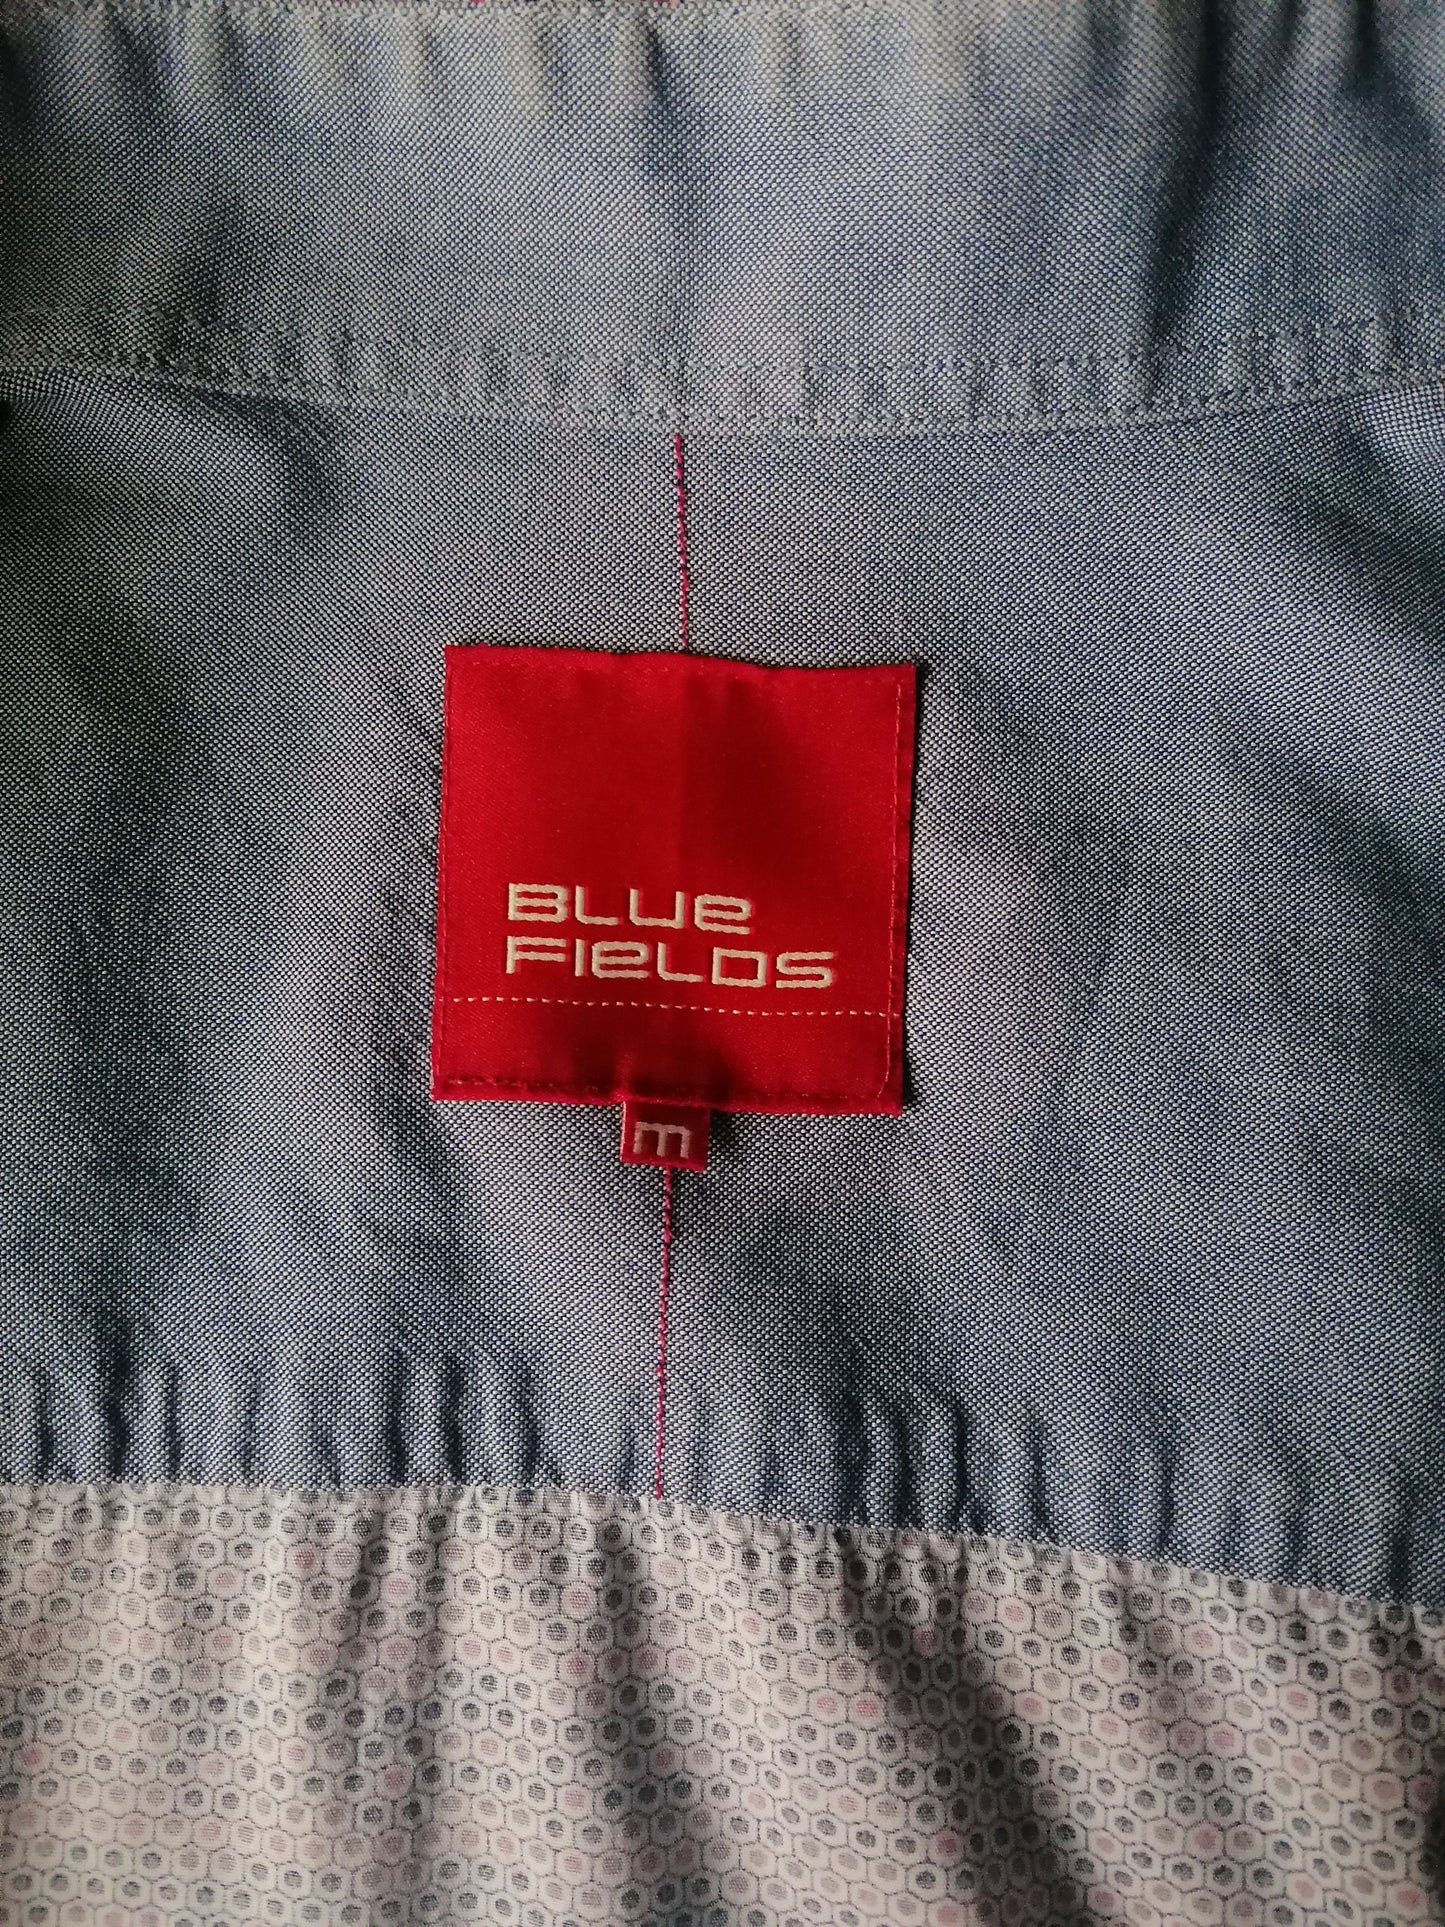 Blue Fields Shirt. Blauer lila rosa Druck. Größe M.